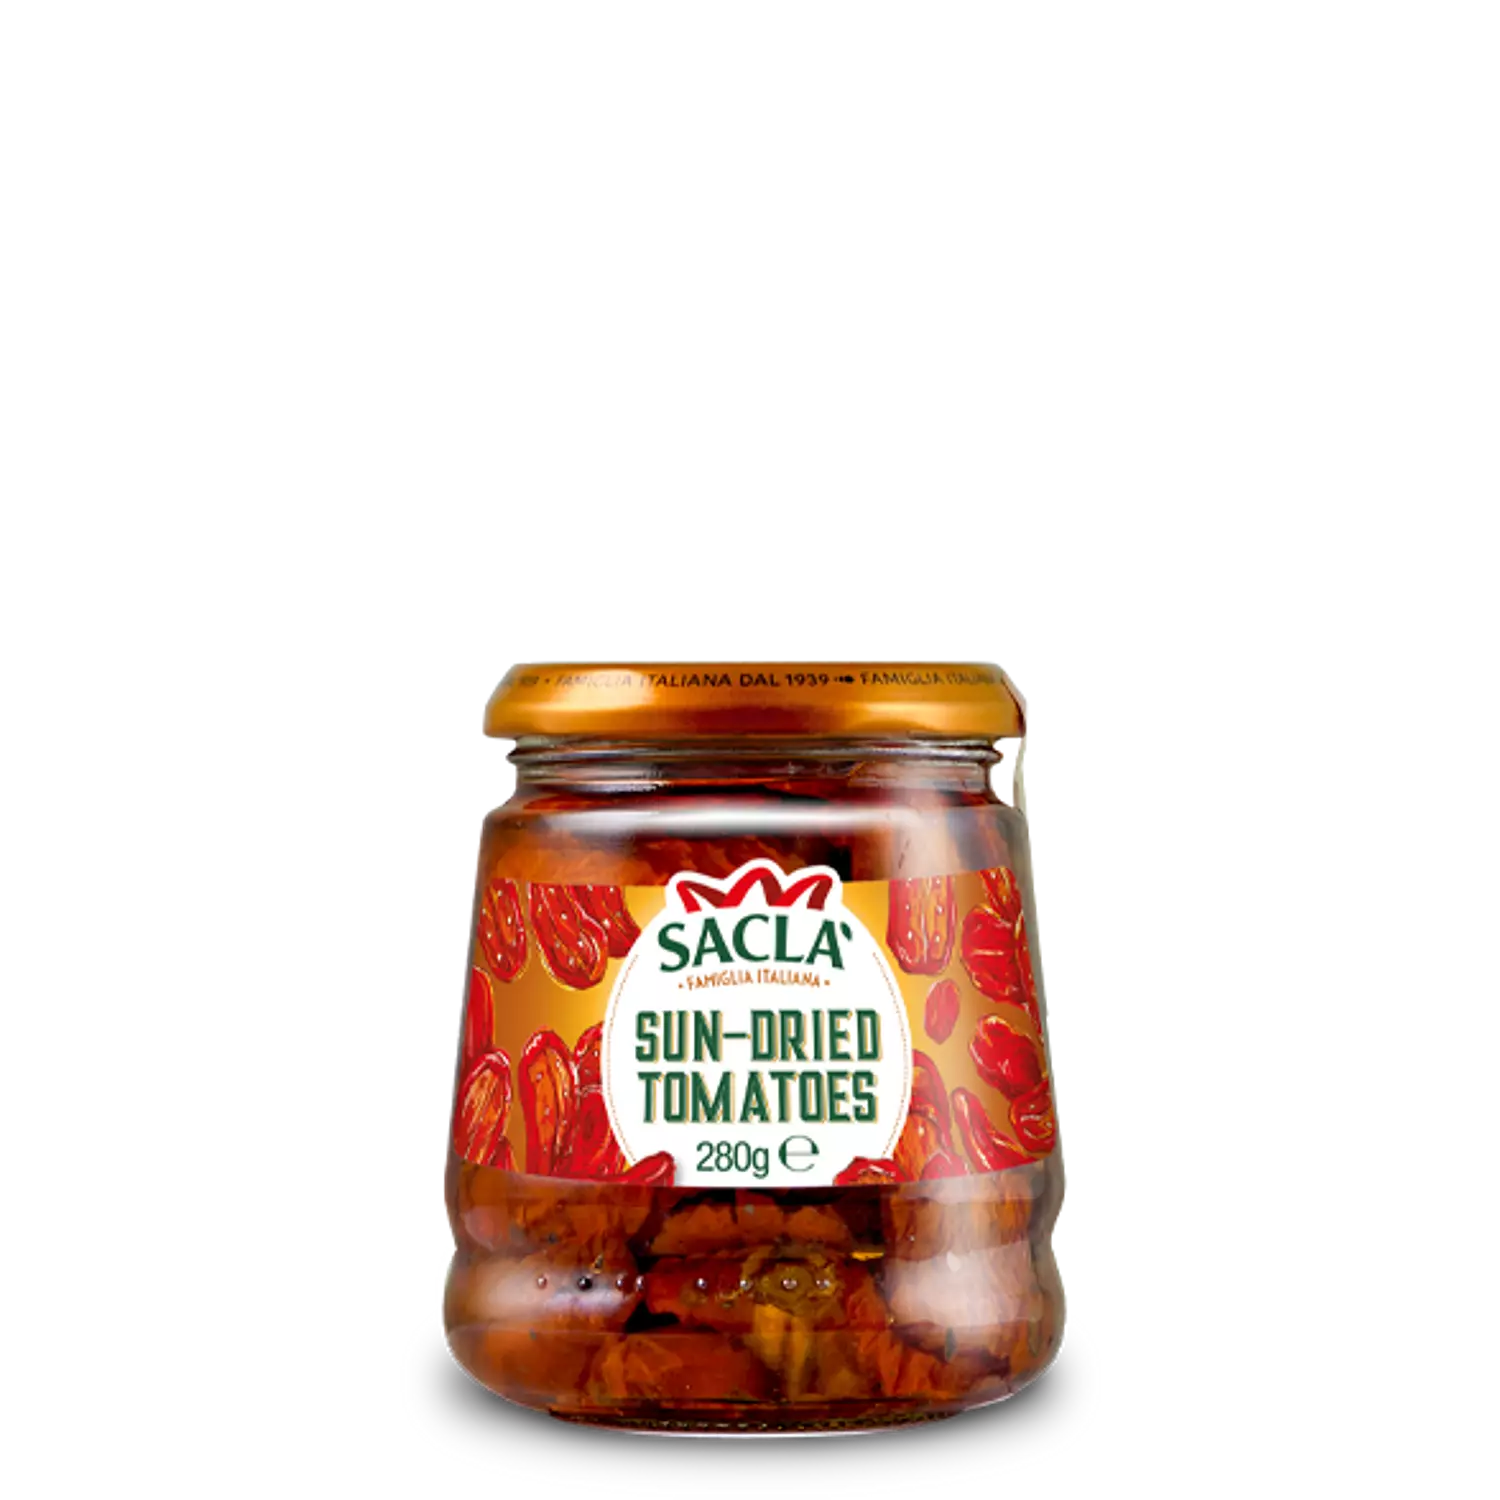 Sacla Italia Antipasti Sun Dried Tomatoes 280g hover image